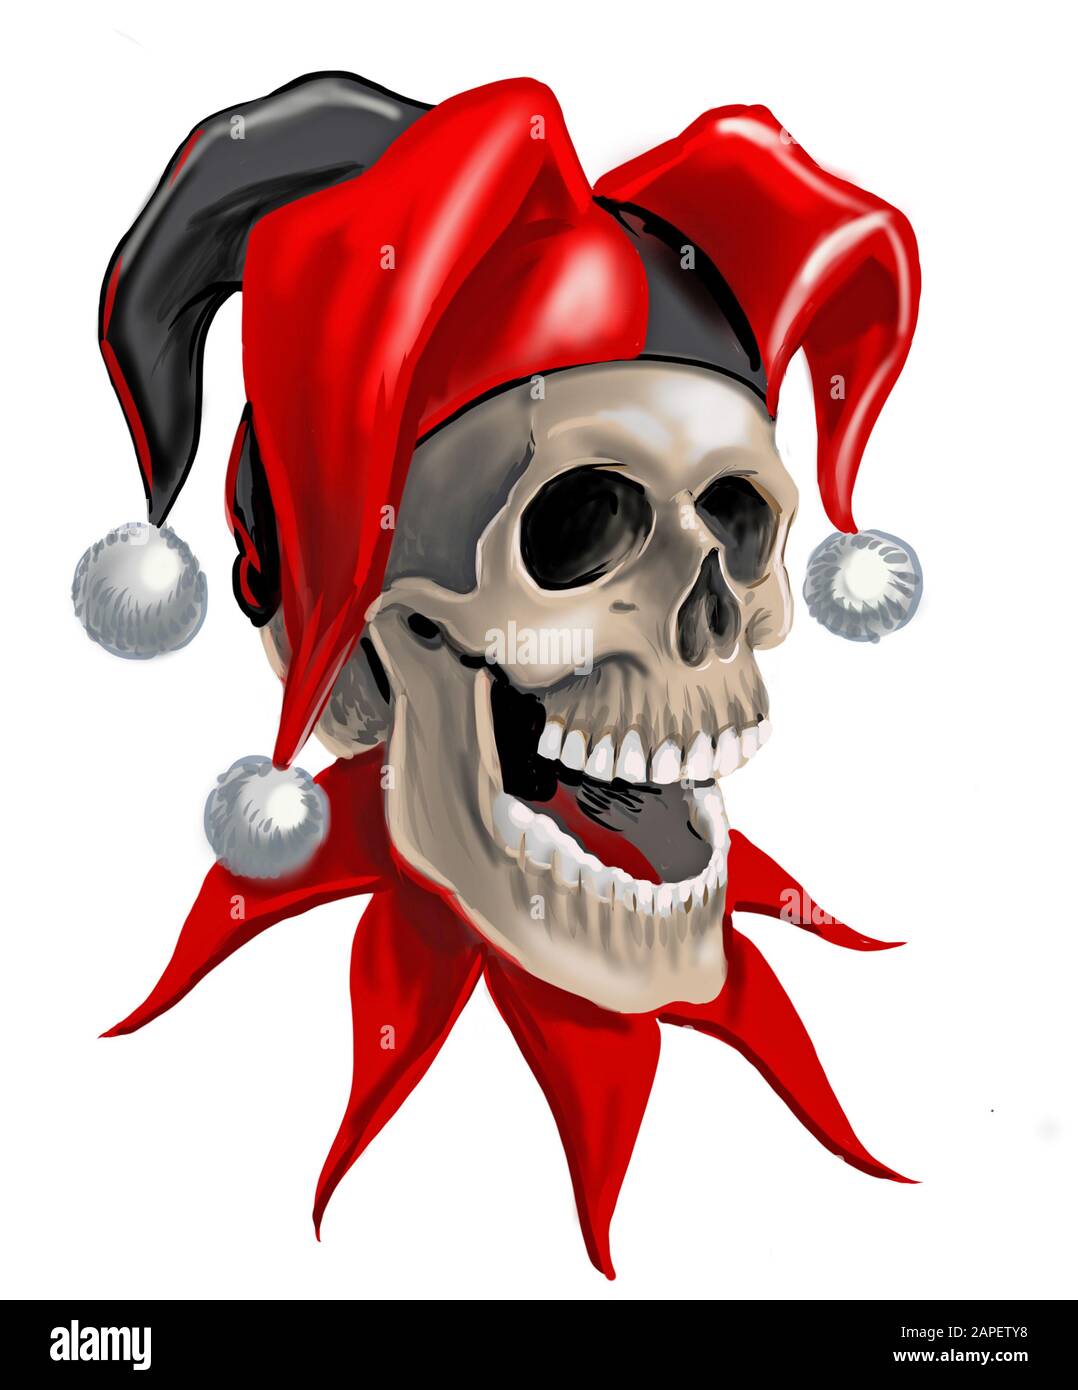 Jester skull. Digital illustration Stock Photo - Alamy